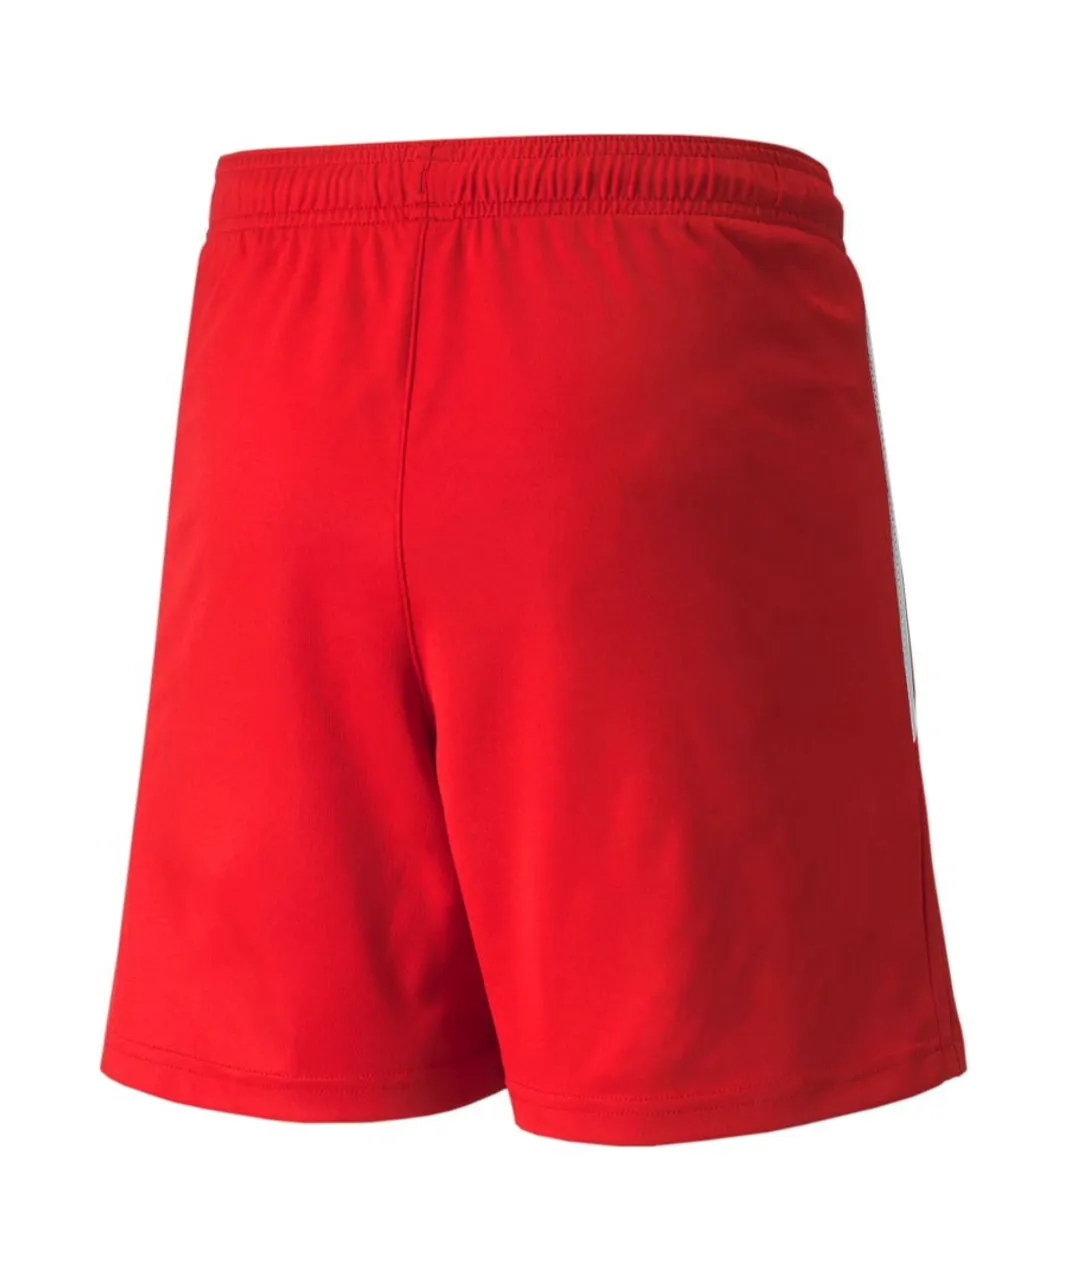 Puma Childrens Unisex teamLIGA Youth Football Shorts - Red